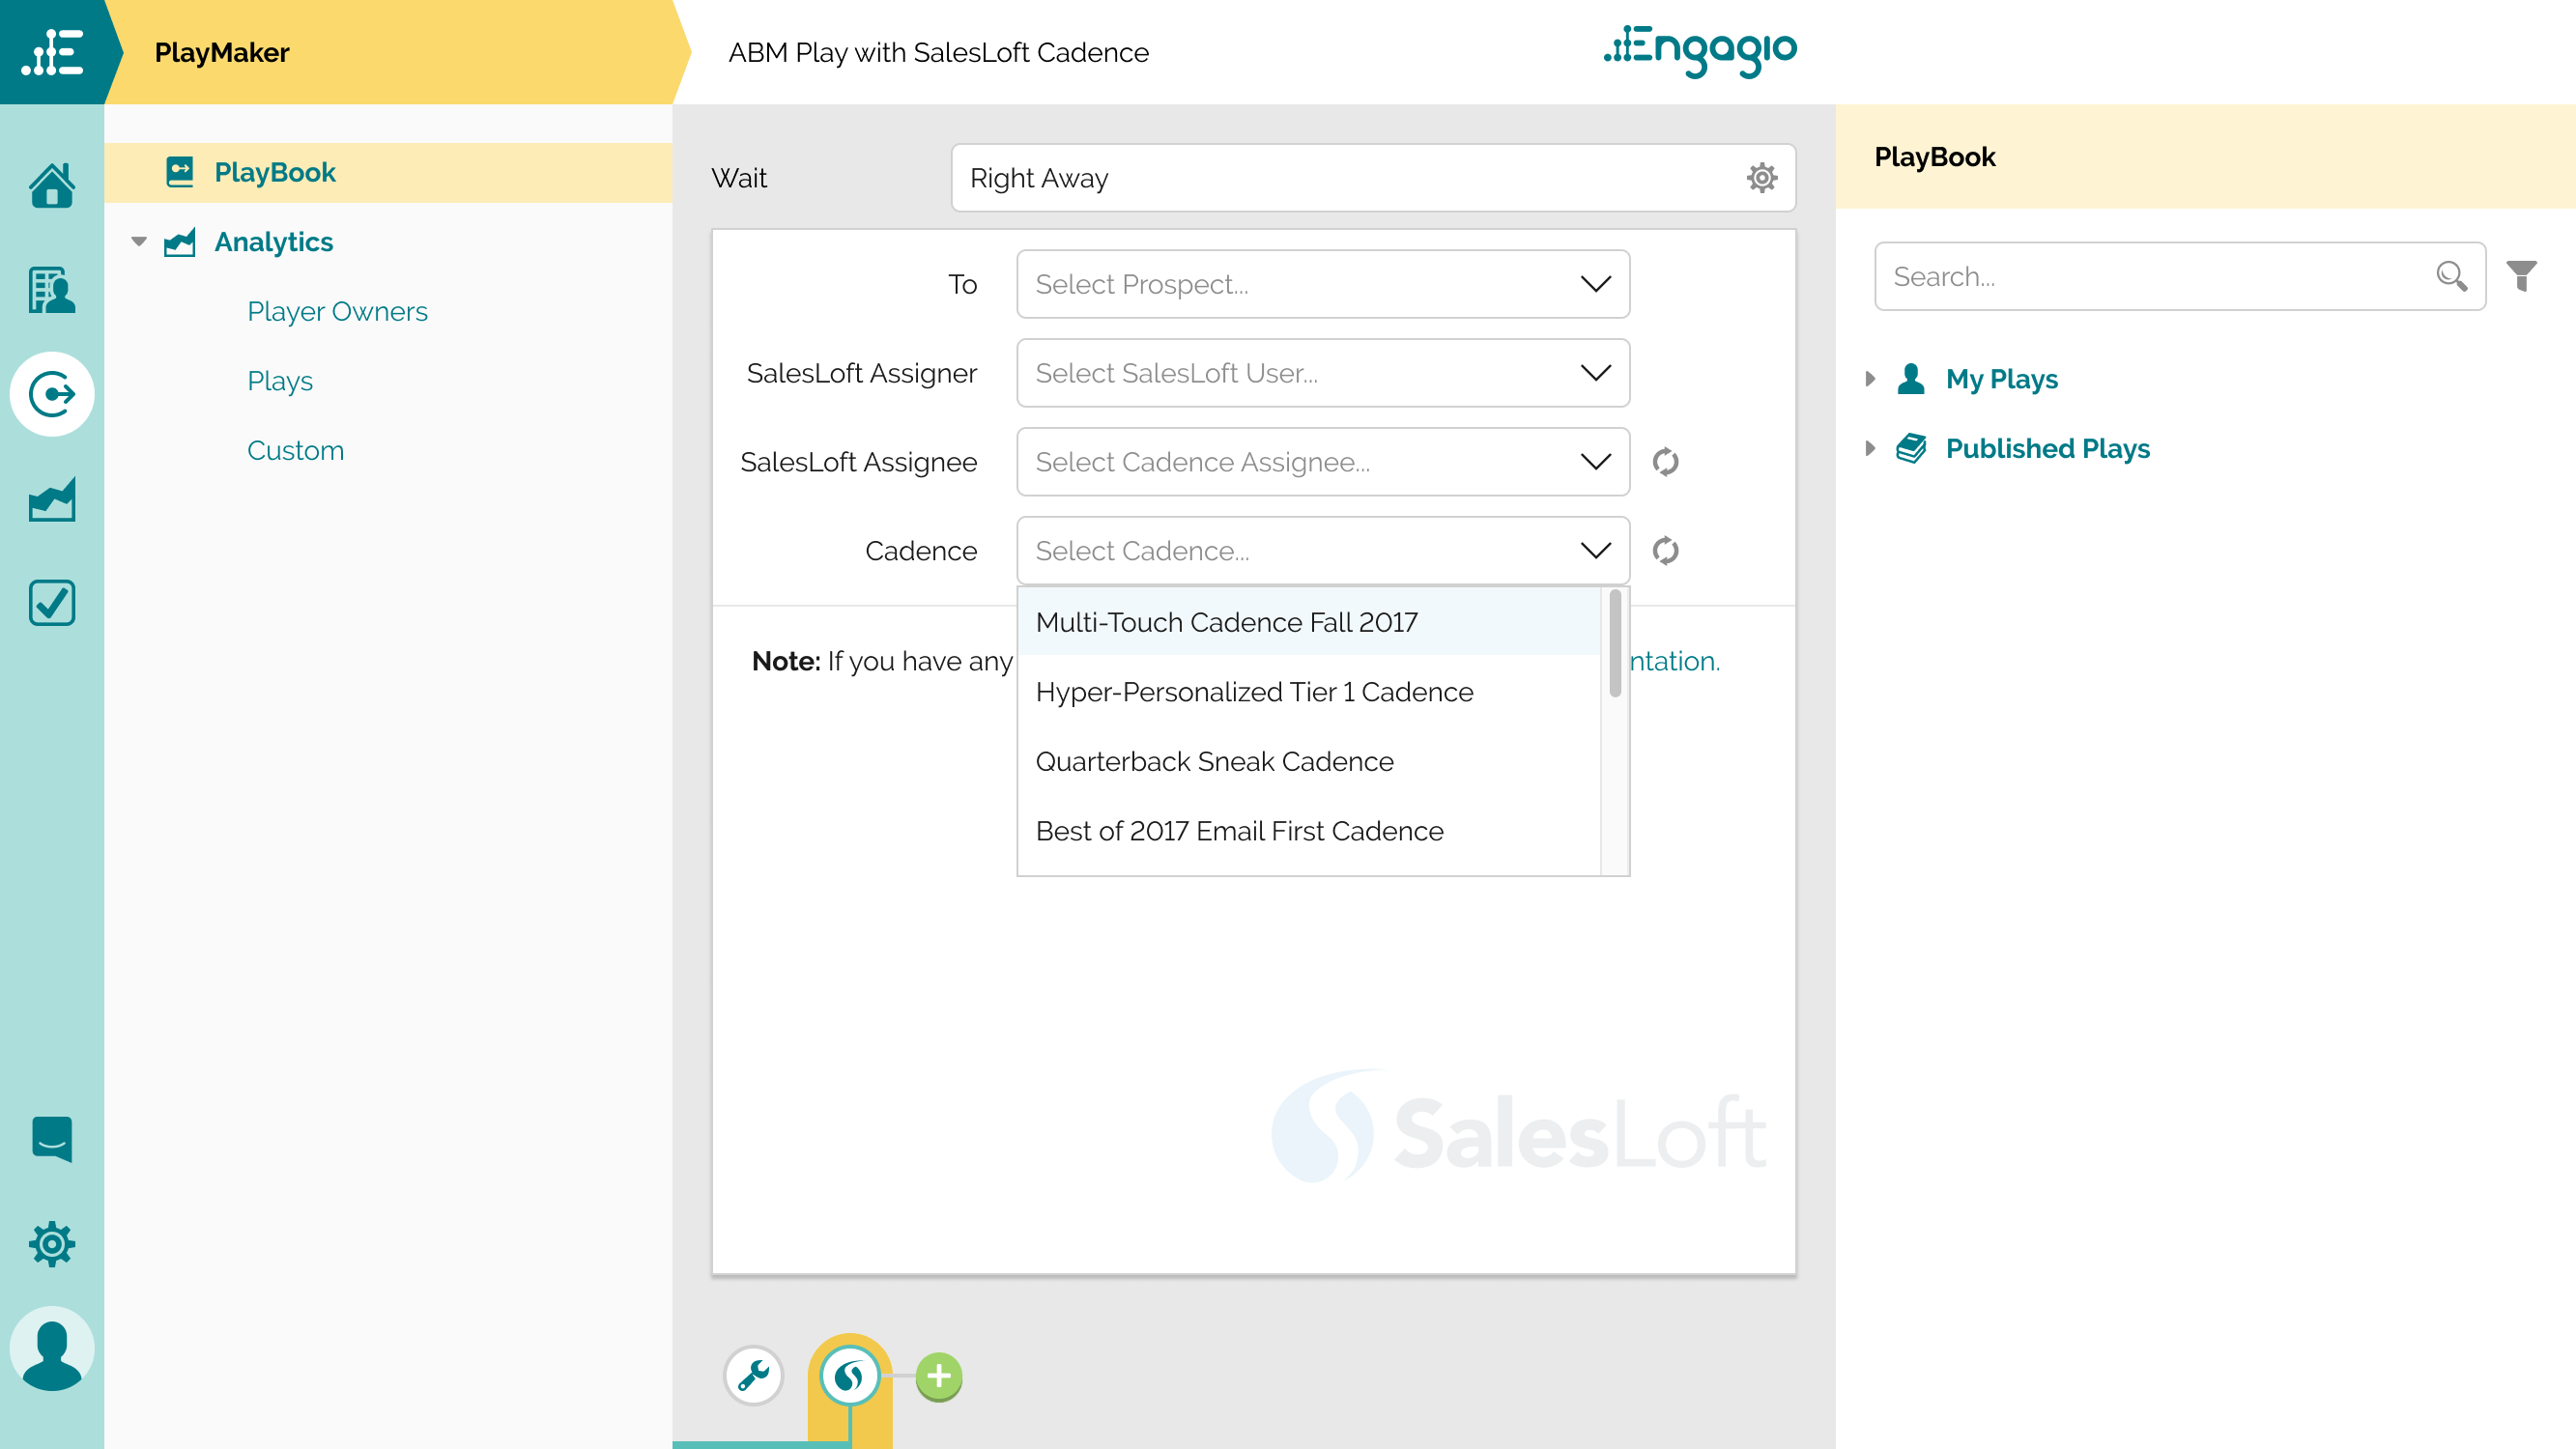 Engagio Logo - Engagio PlayMaker now integrates with the SalesLoft platform - SalesLoft